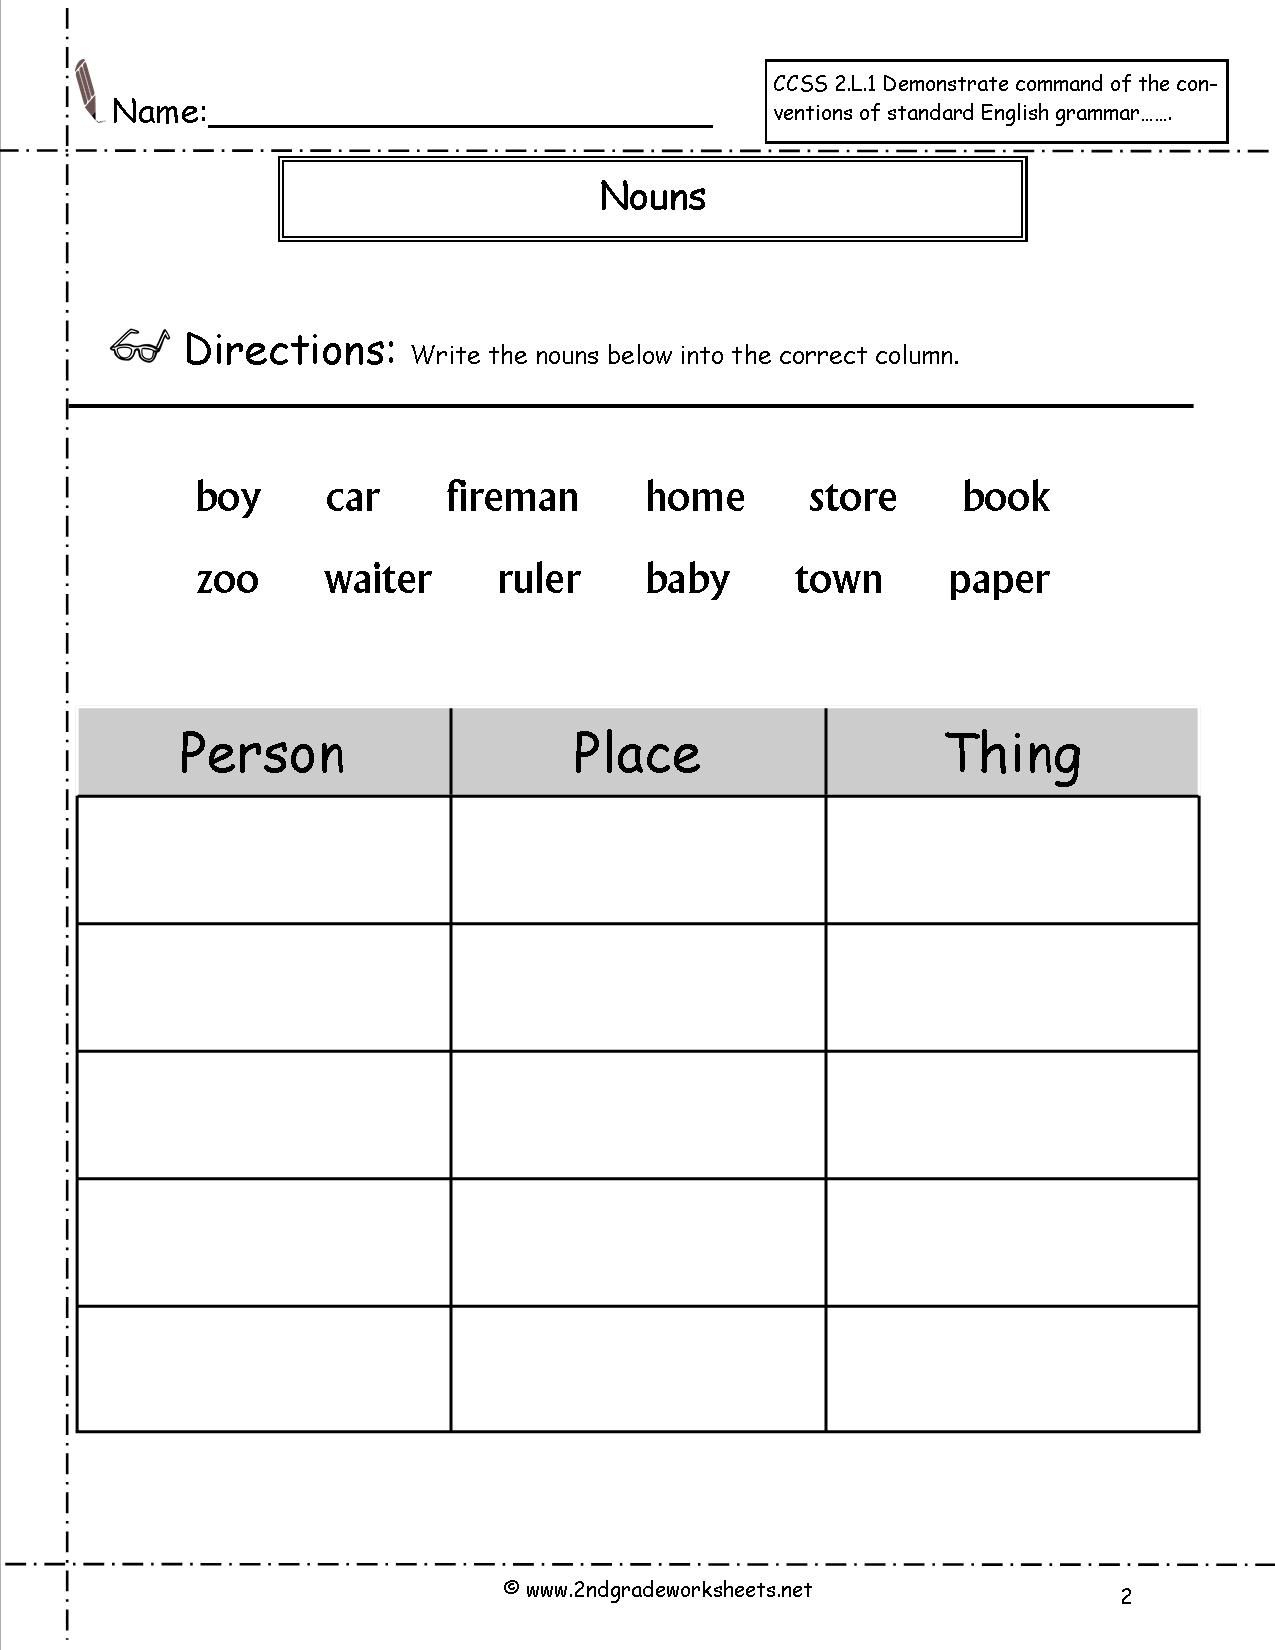 Possessive Noun Worksheets - Super Teacher Worksheets, Use Printable | Teacher Printable Worksheets